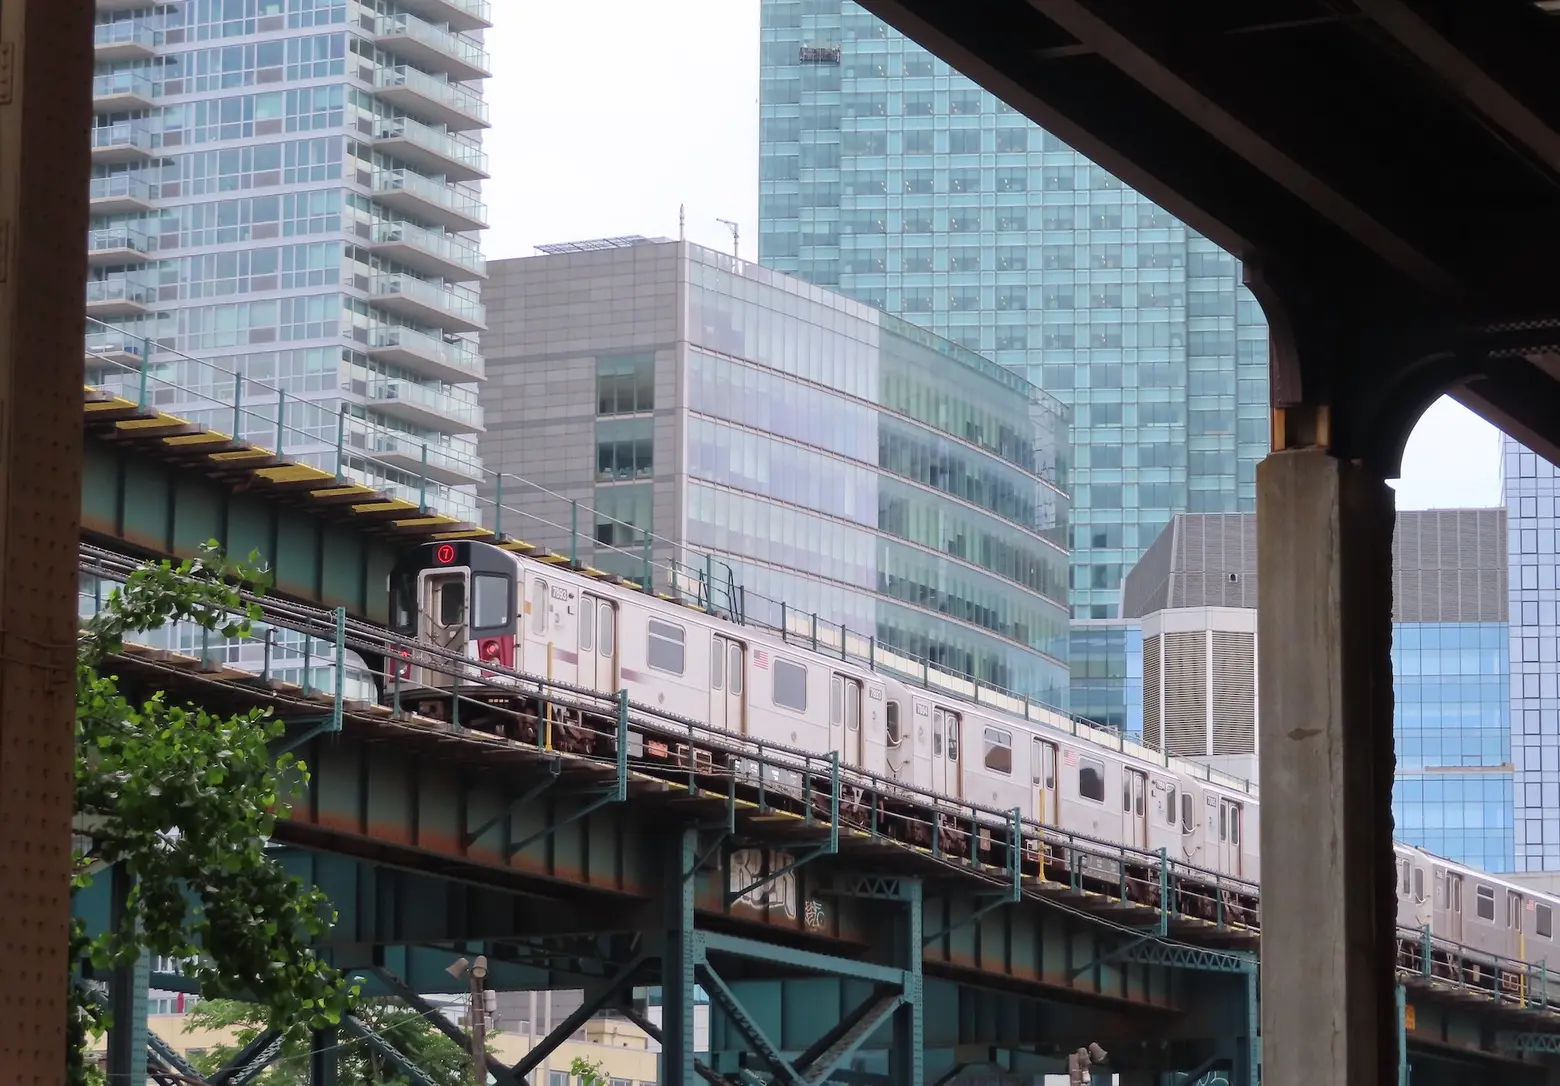 7 train will not run between Queens and Manhattan for six weekends